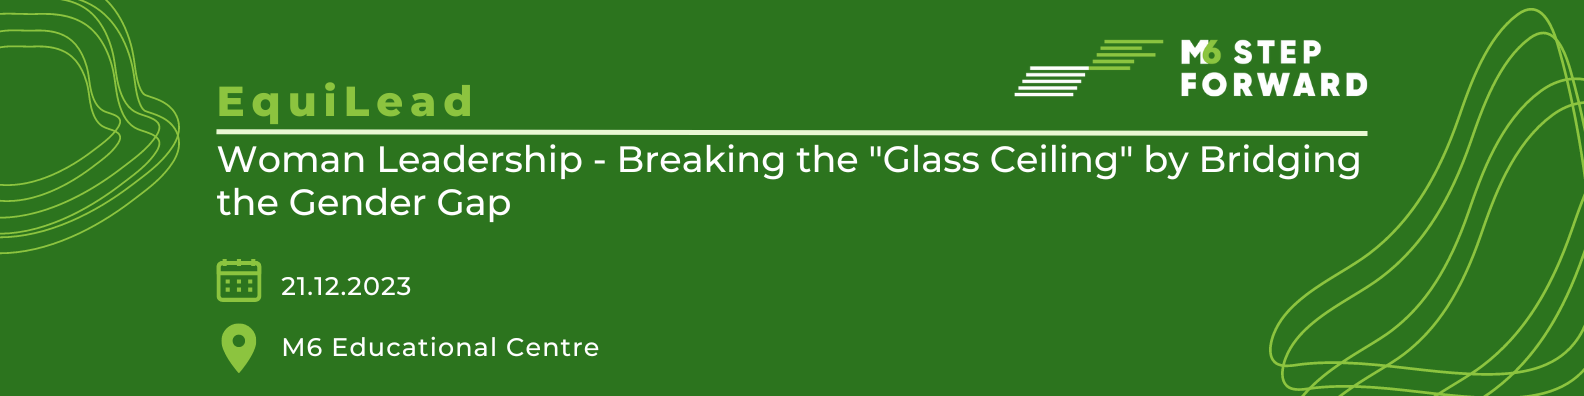 Woman Leadership - Breaking the "Glass Ceiling" by Bridging the Gender Gap